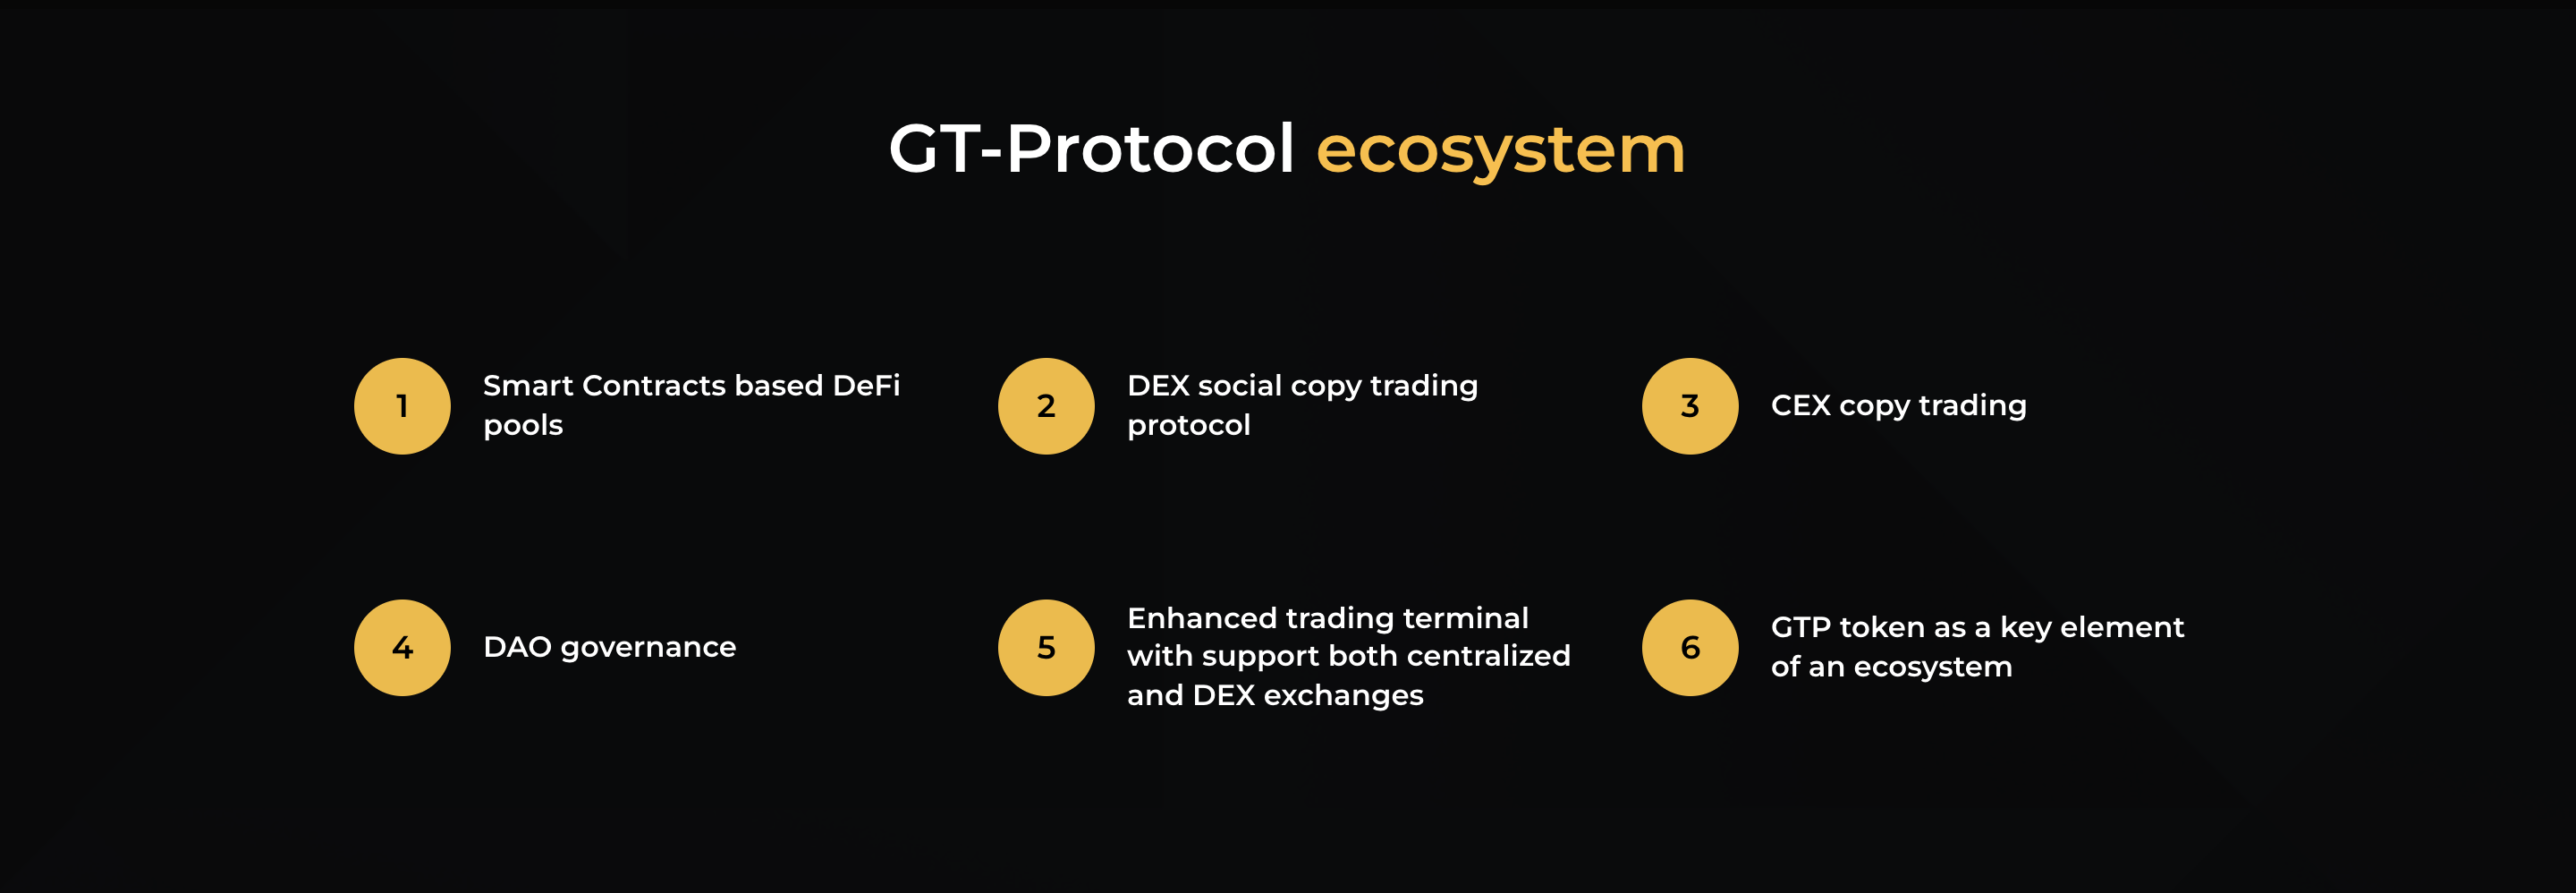 GT-Protocol Ecosystem